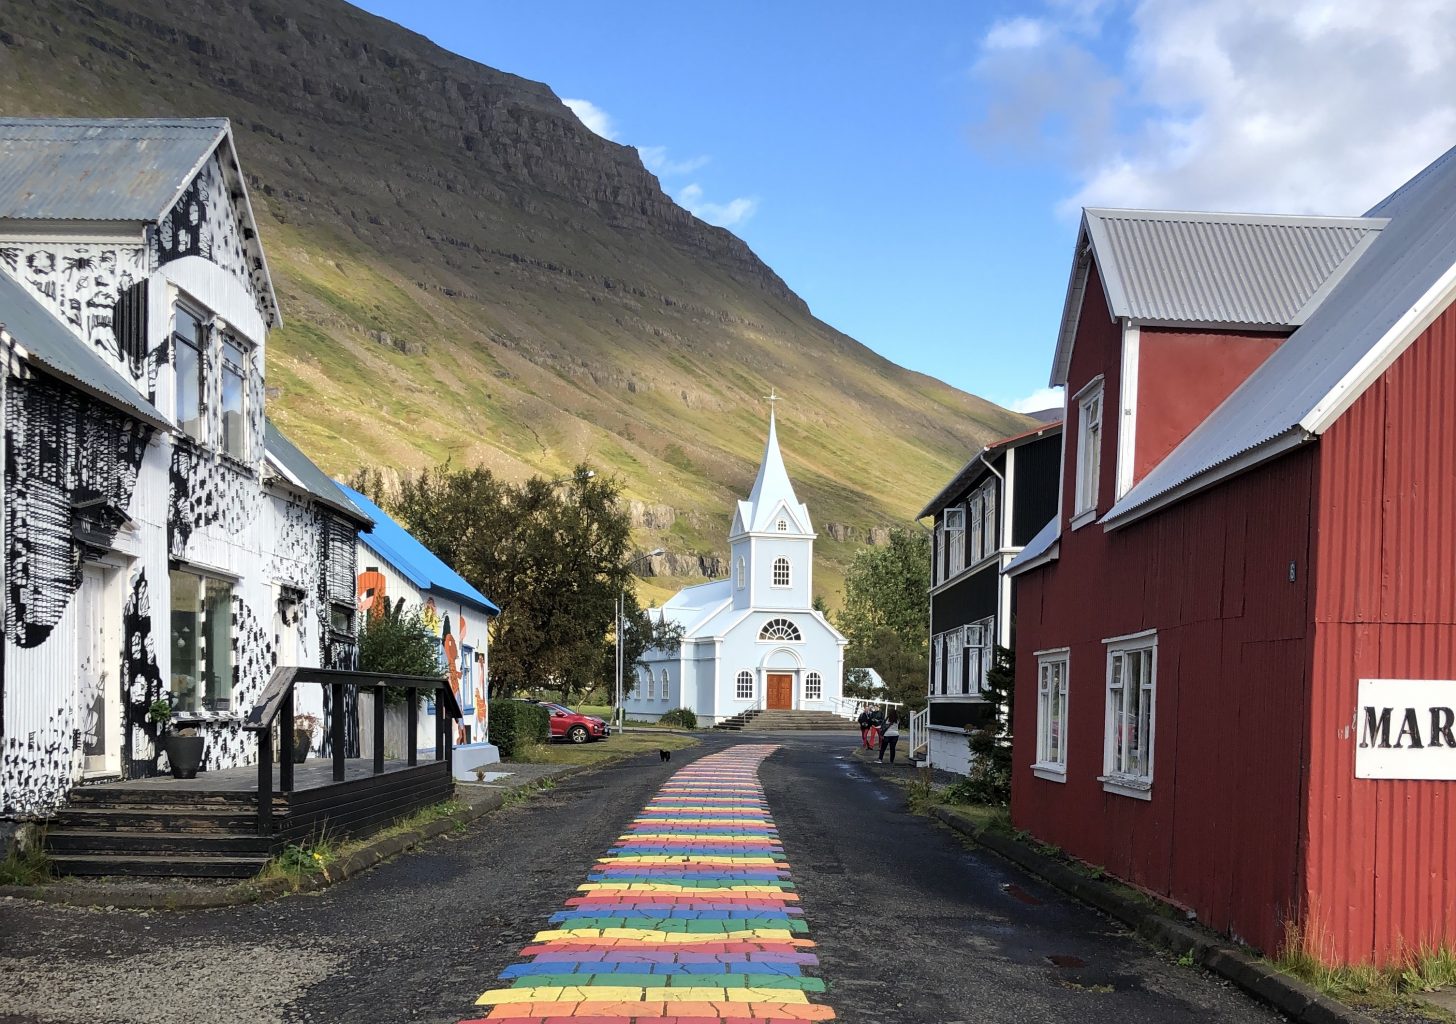 Seyðisfjörður. Ruta de 15 días por Islandia en furgoneta camper